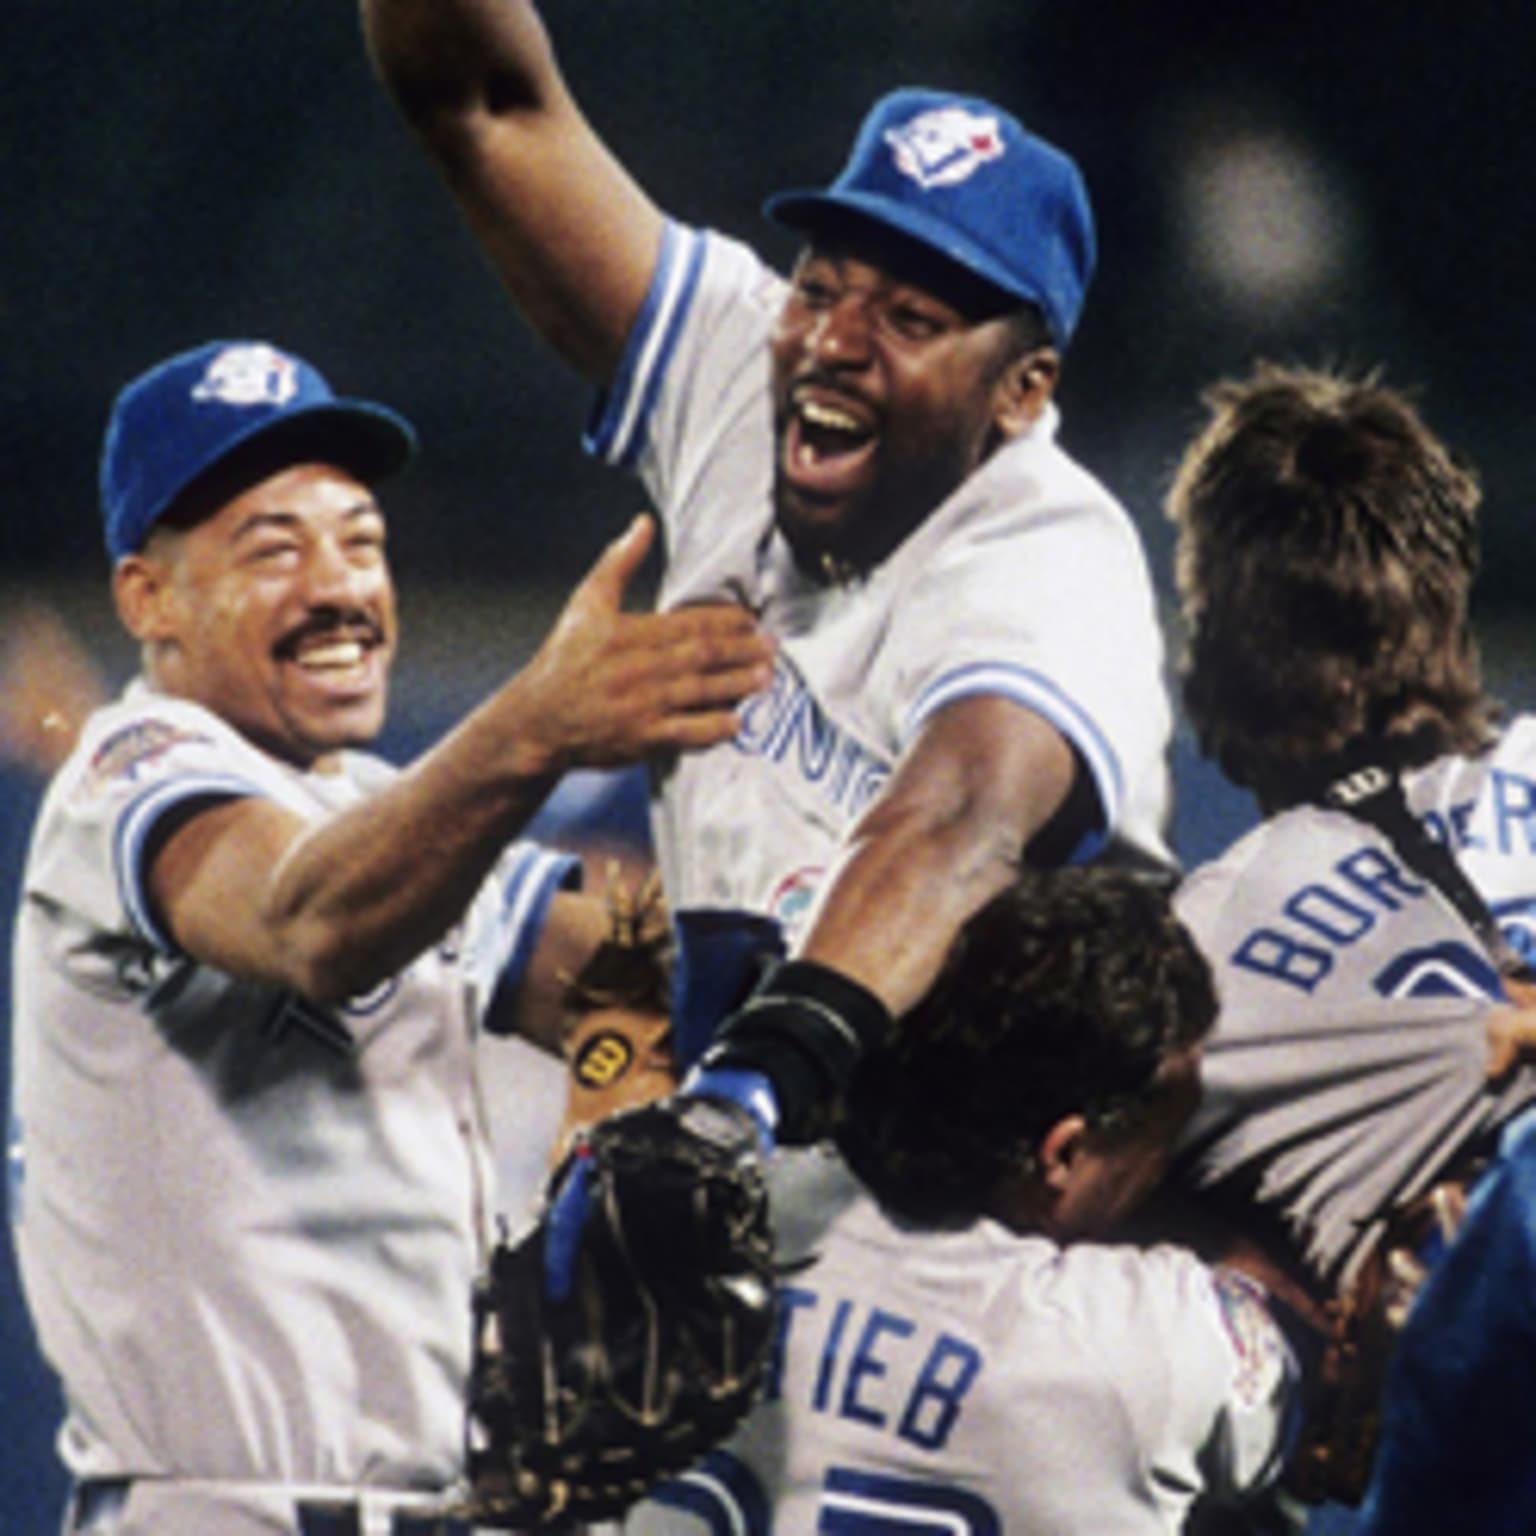 1992 World Series: Atlanta Braves vs Toronto Blue Jays (Video 1992